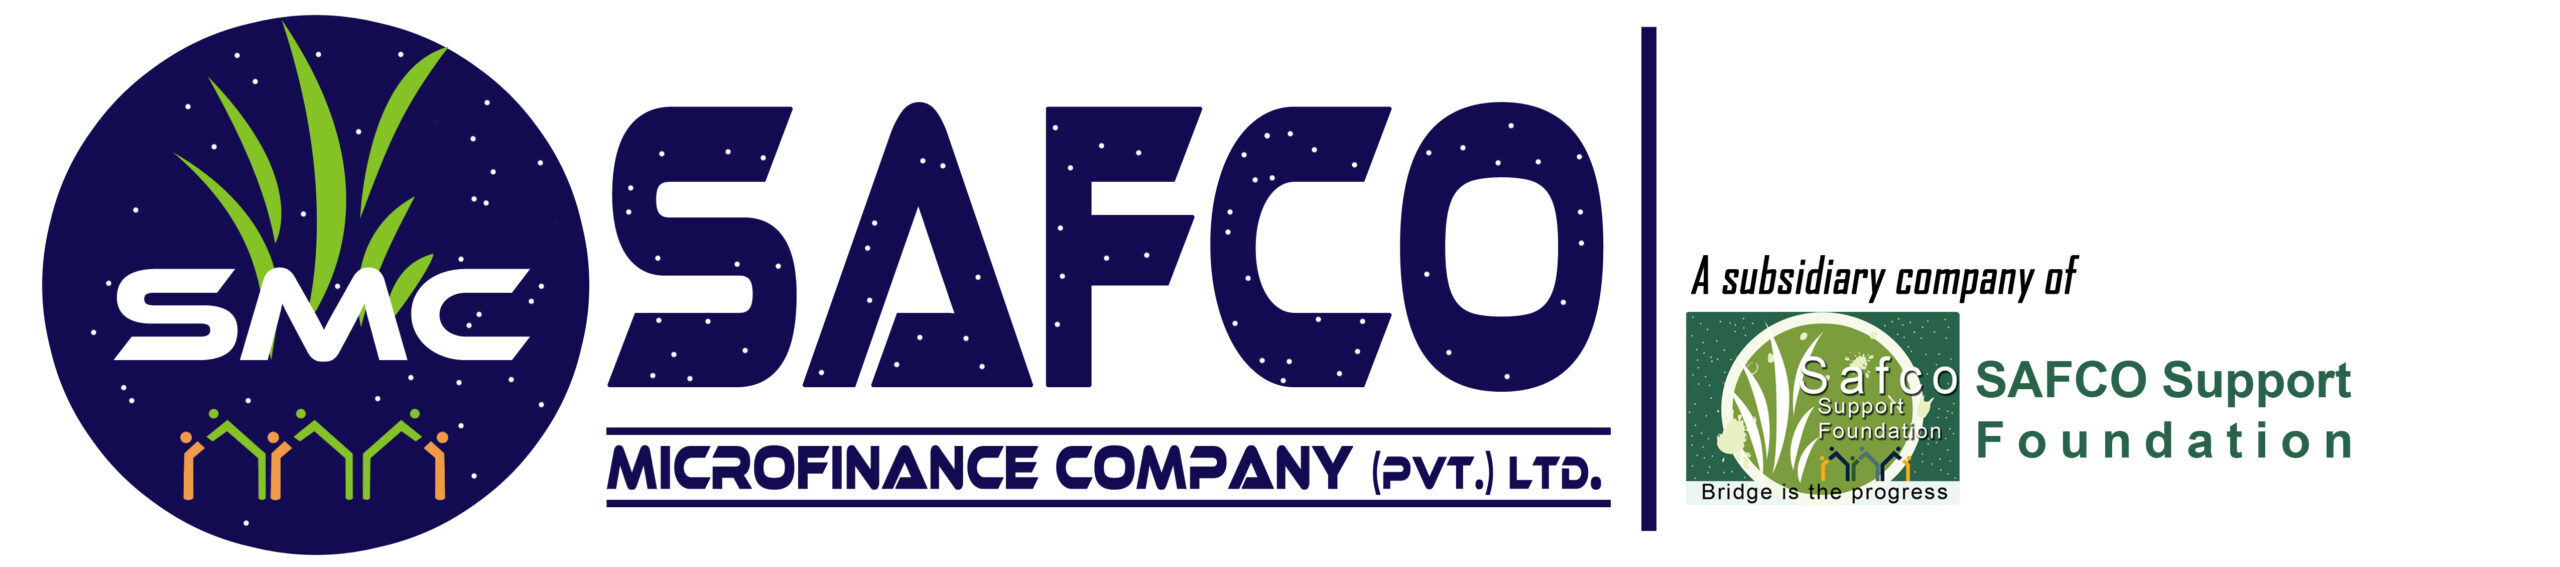 SAFCO Microfinance Company